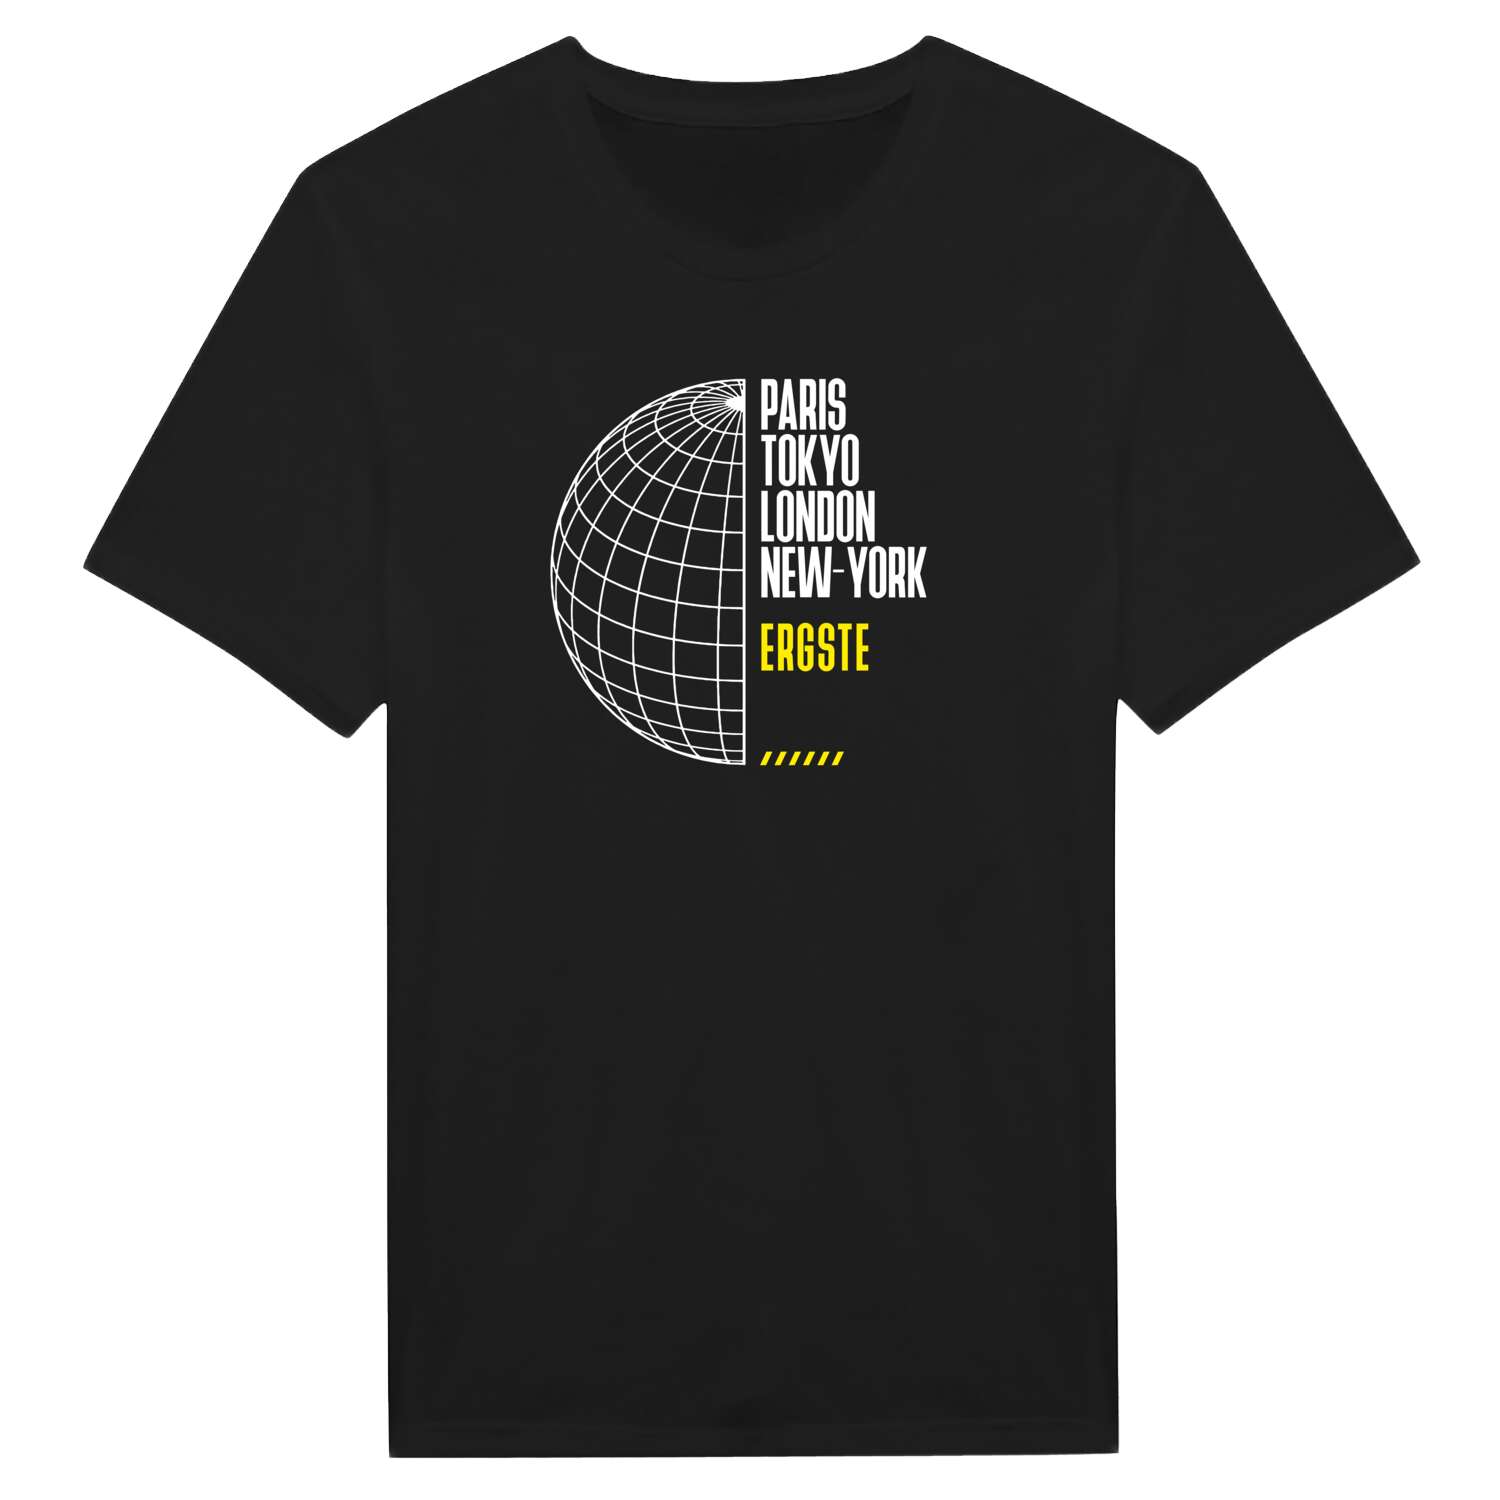 Ergste T-Shirt »Paris Tokyo London«